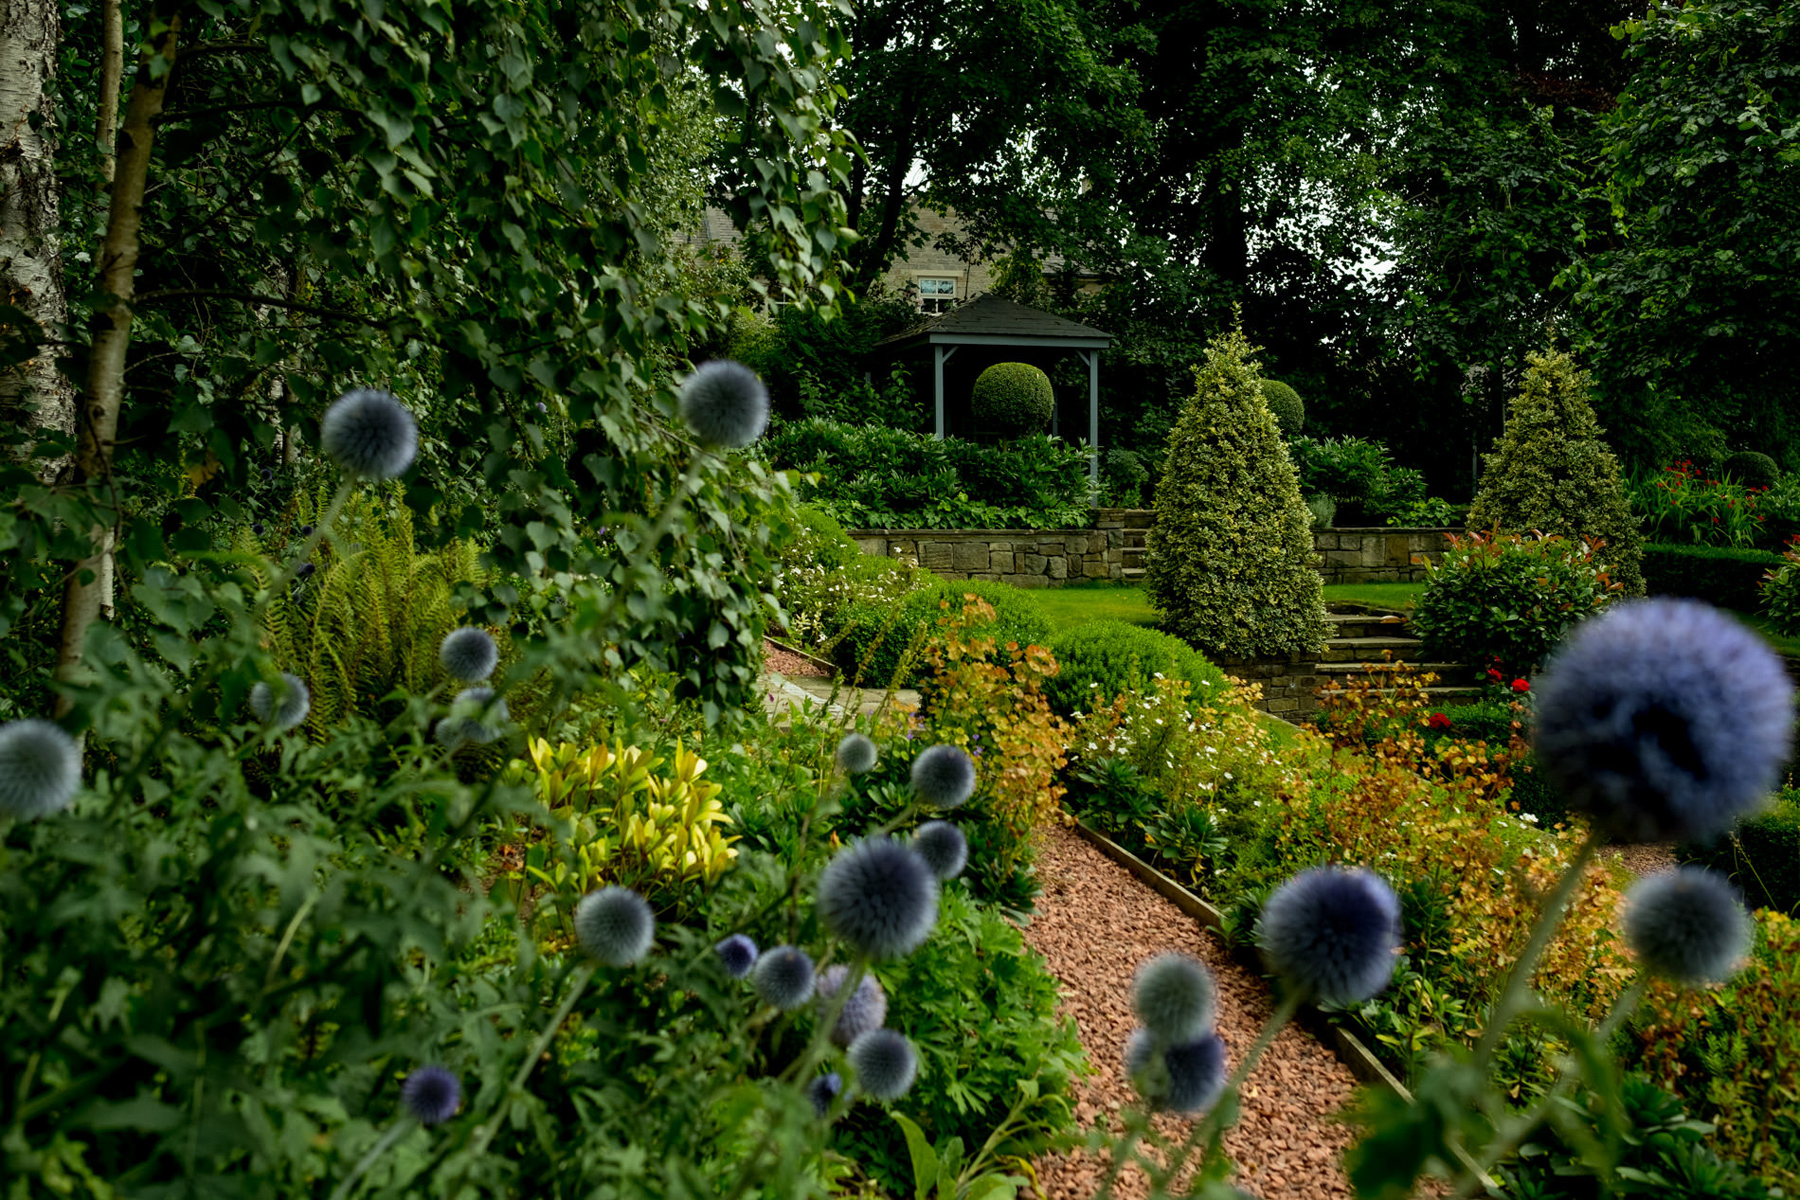 Echinops In Formal English Garden Garden Design And Build In Ha Kingdom Gardens,2 Bedroom Apartments For Rent In Atlanta Ga Under 600